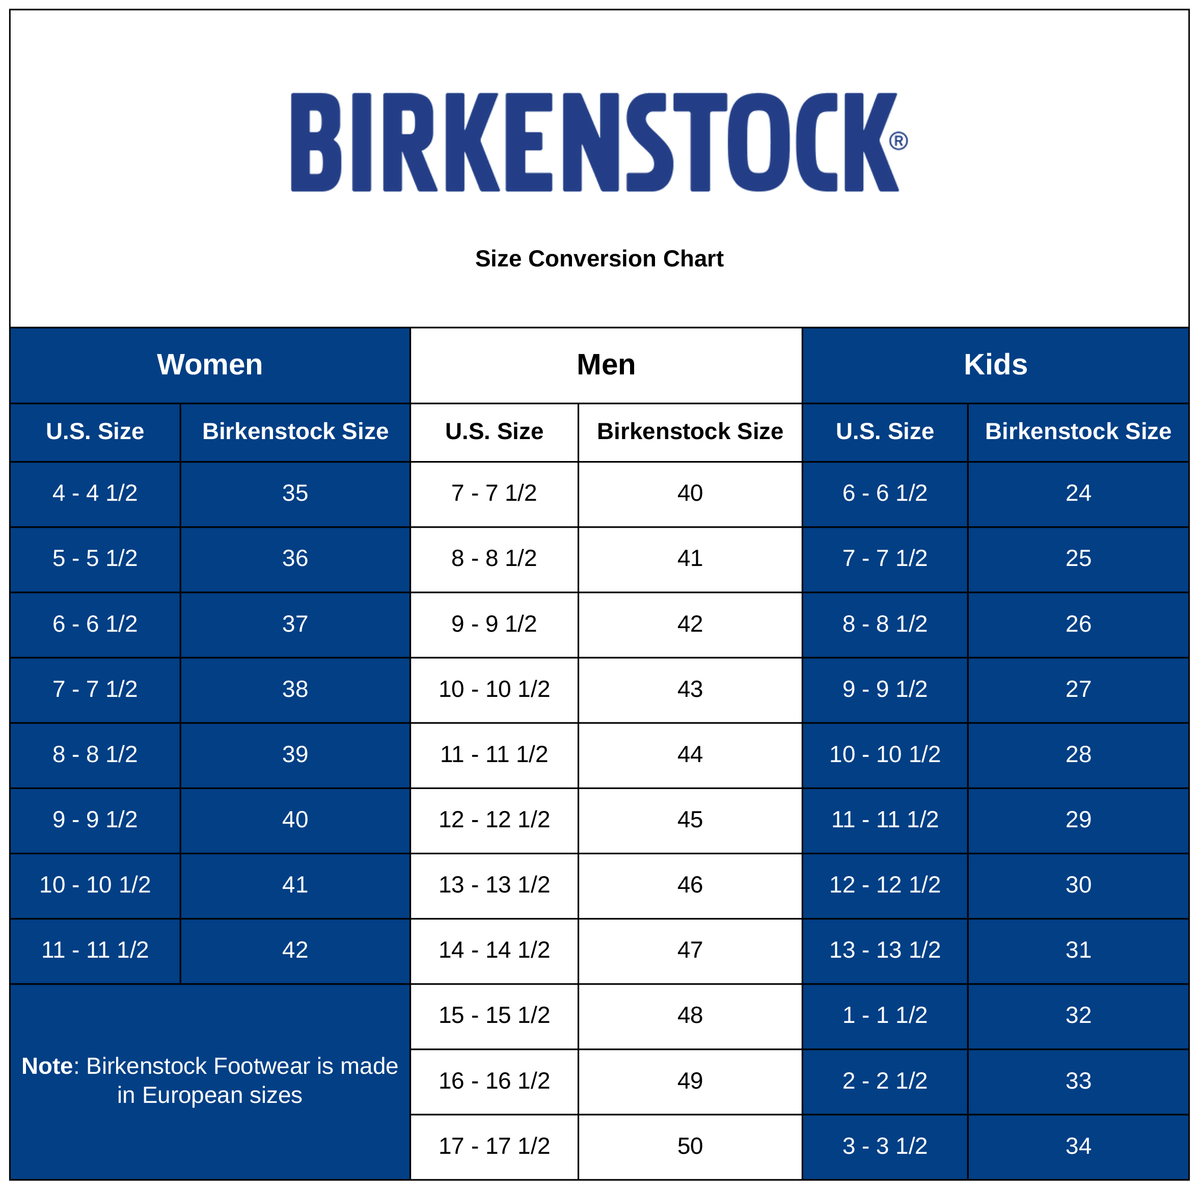 Birkenstock Arizona EVA Sandals - Elemental Blue (Narrow/Medium)